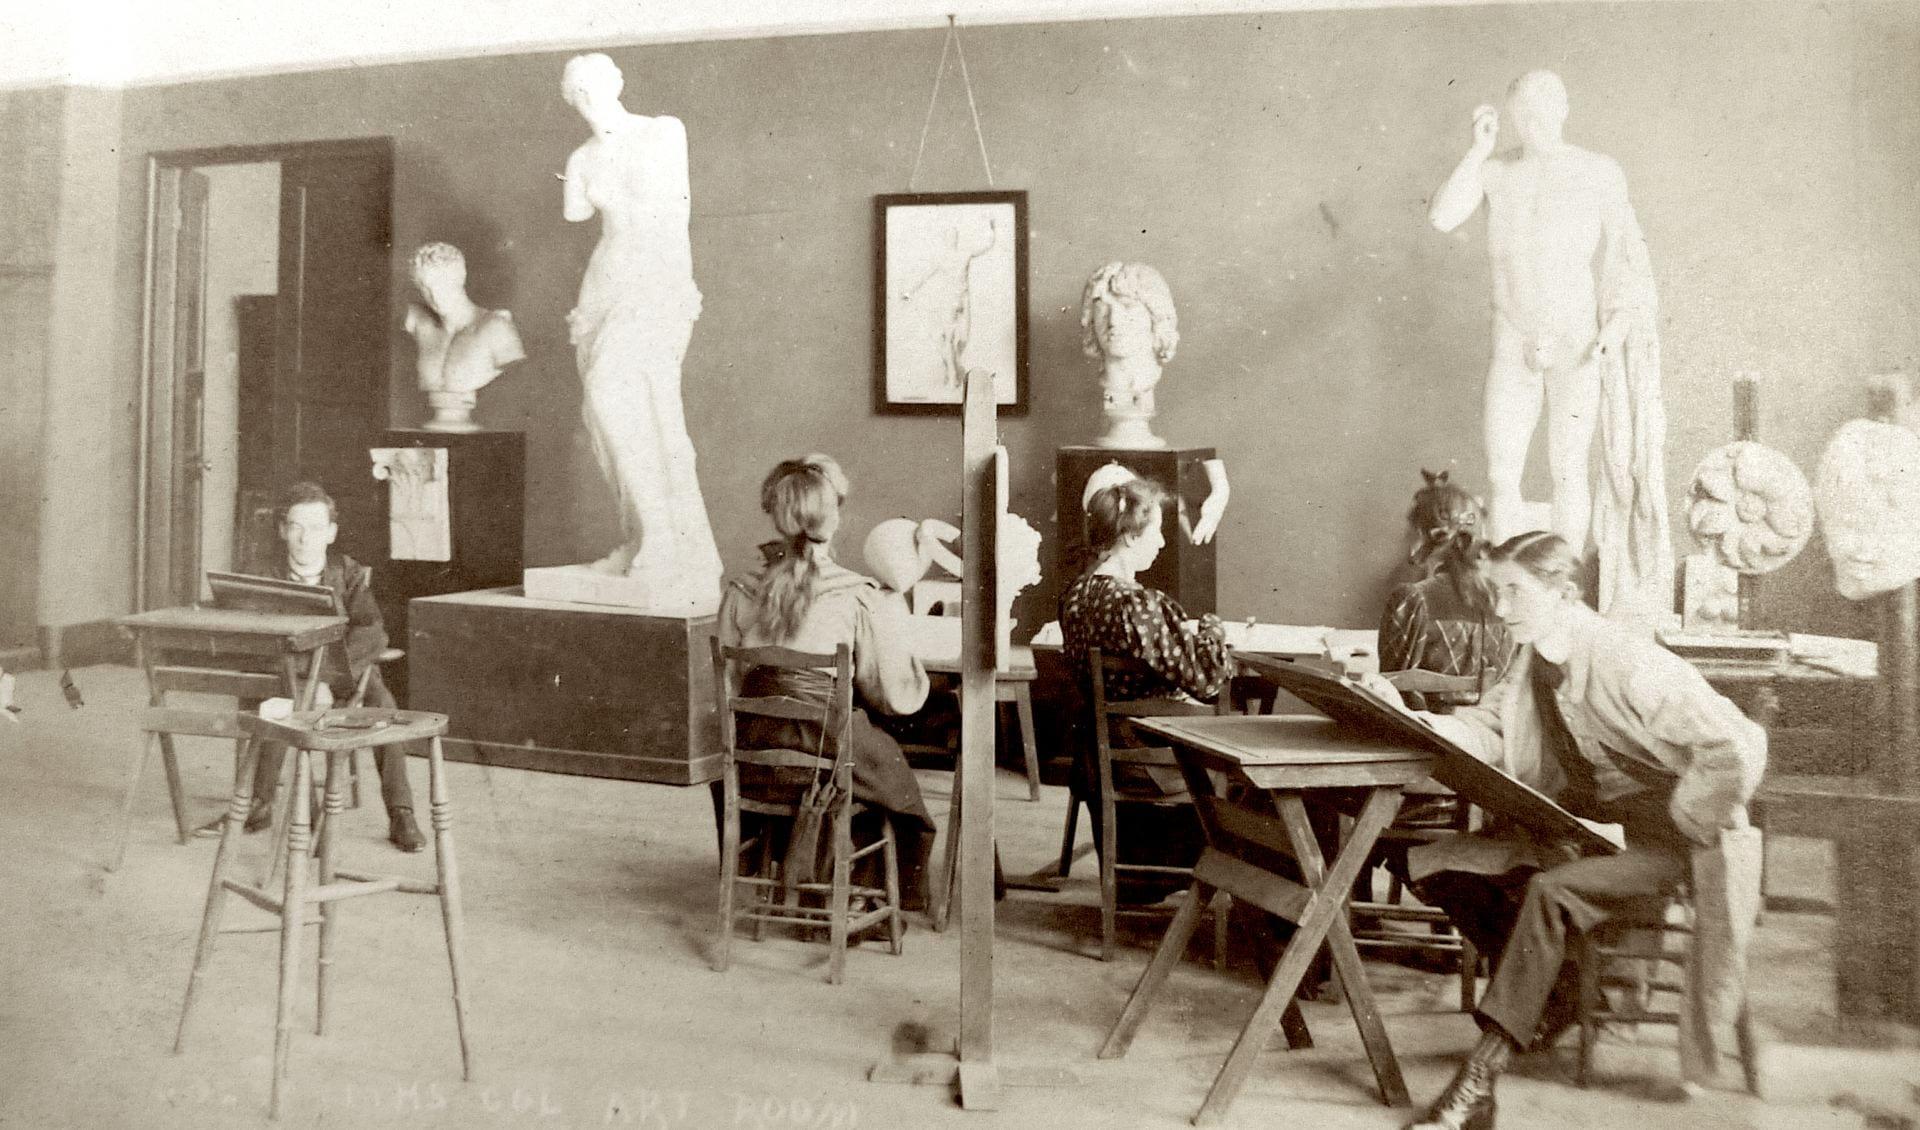 Goldsmiths Art students in 1908